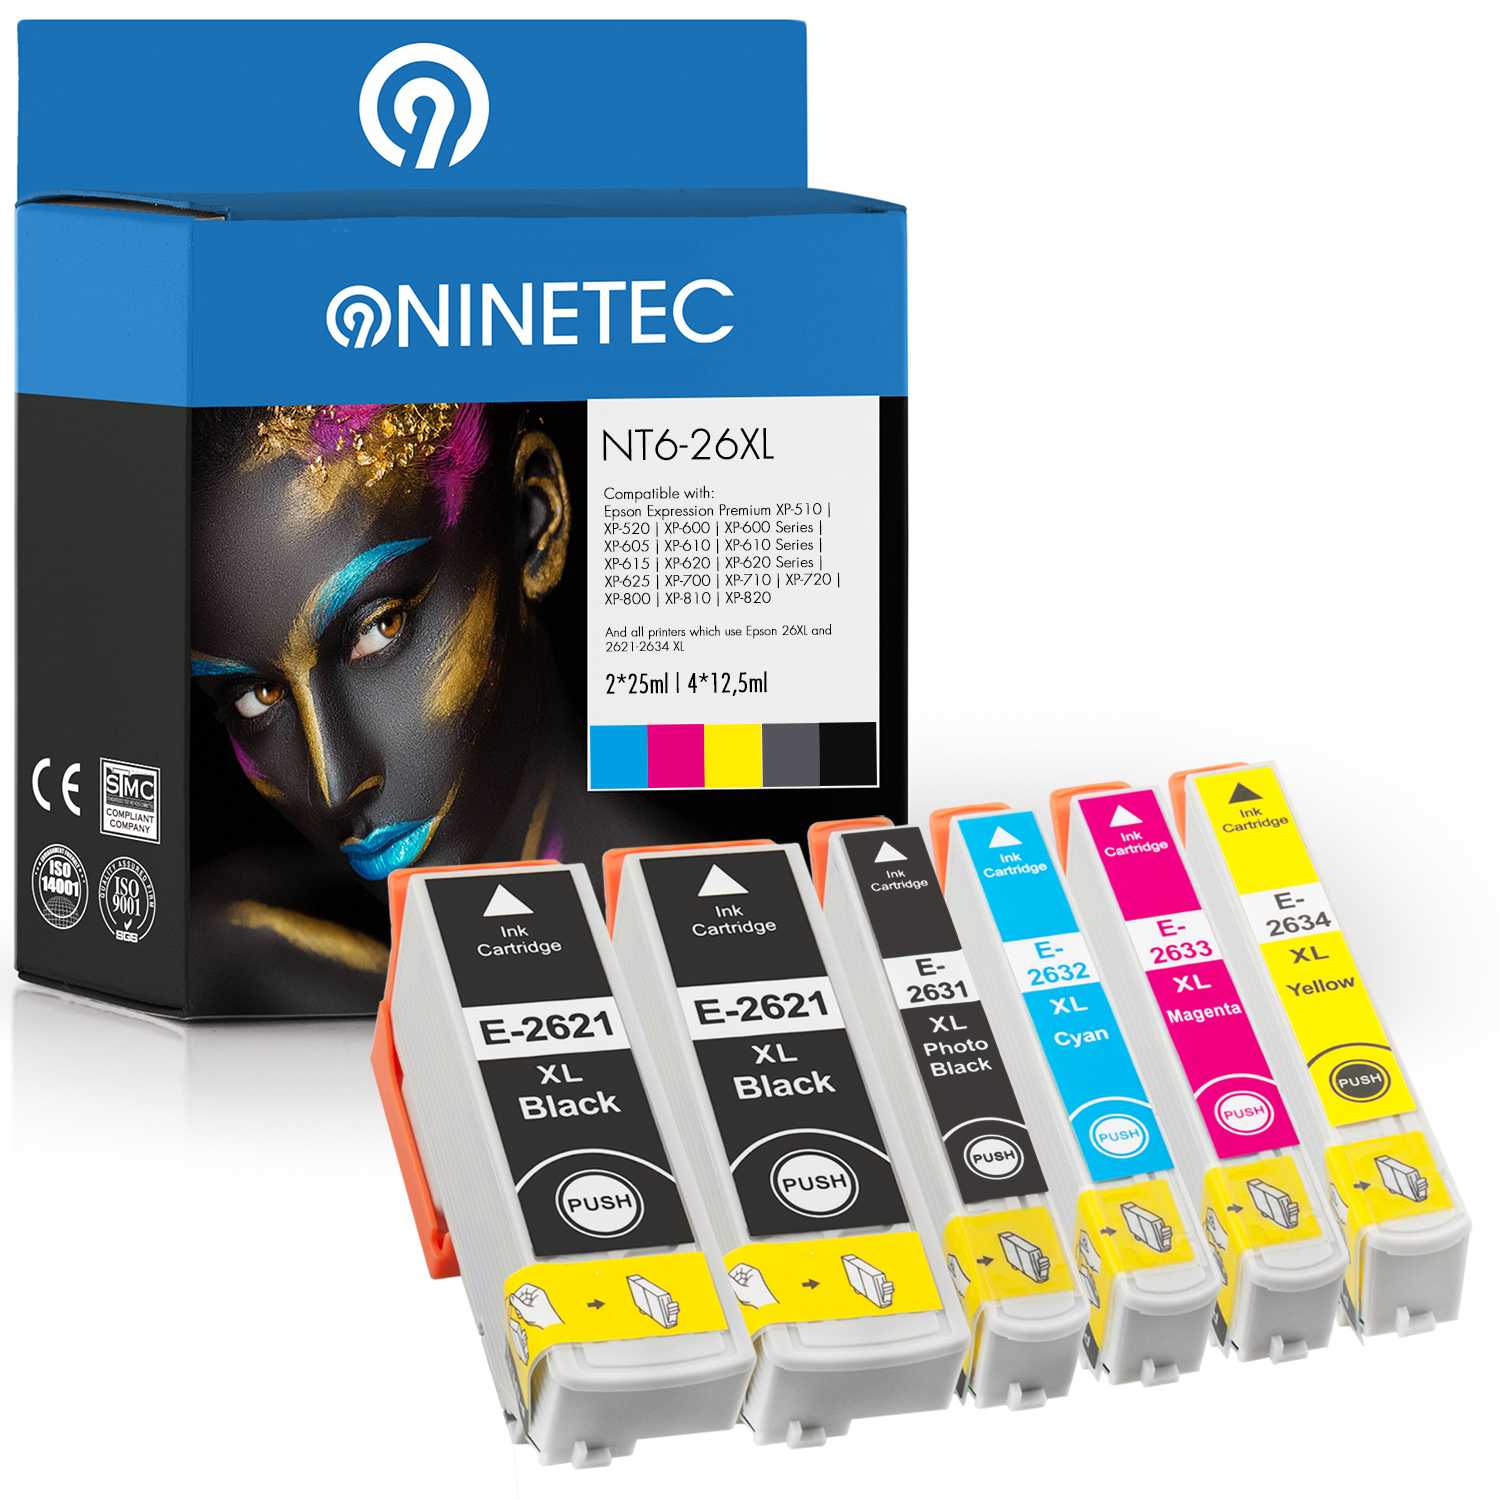 NINETEC 6er Set T black, magenta, (C yellow 13 26364510) Tintenpatronen cyan, ersetzt photoblack, T2621-T2634 26XL Epson